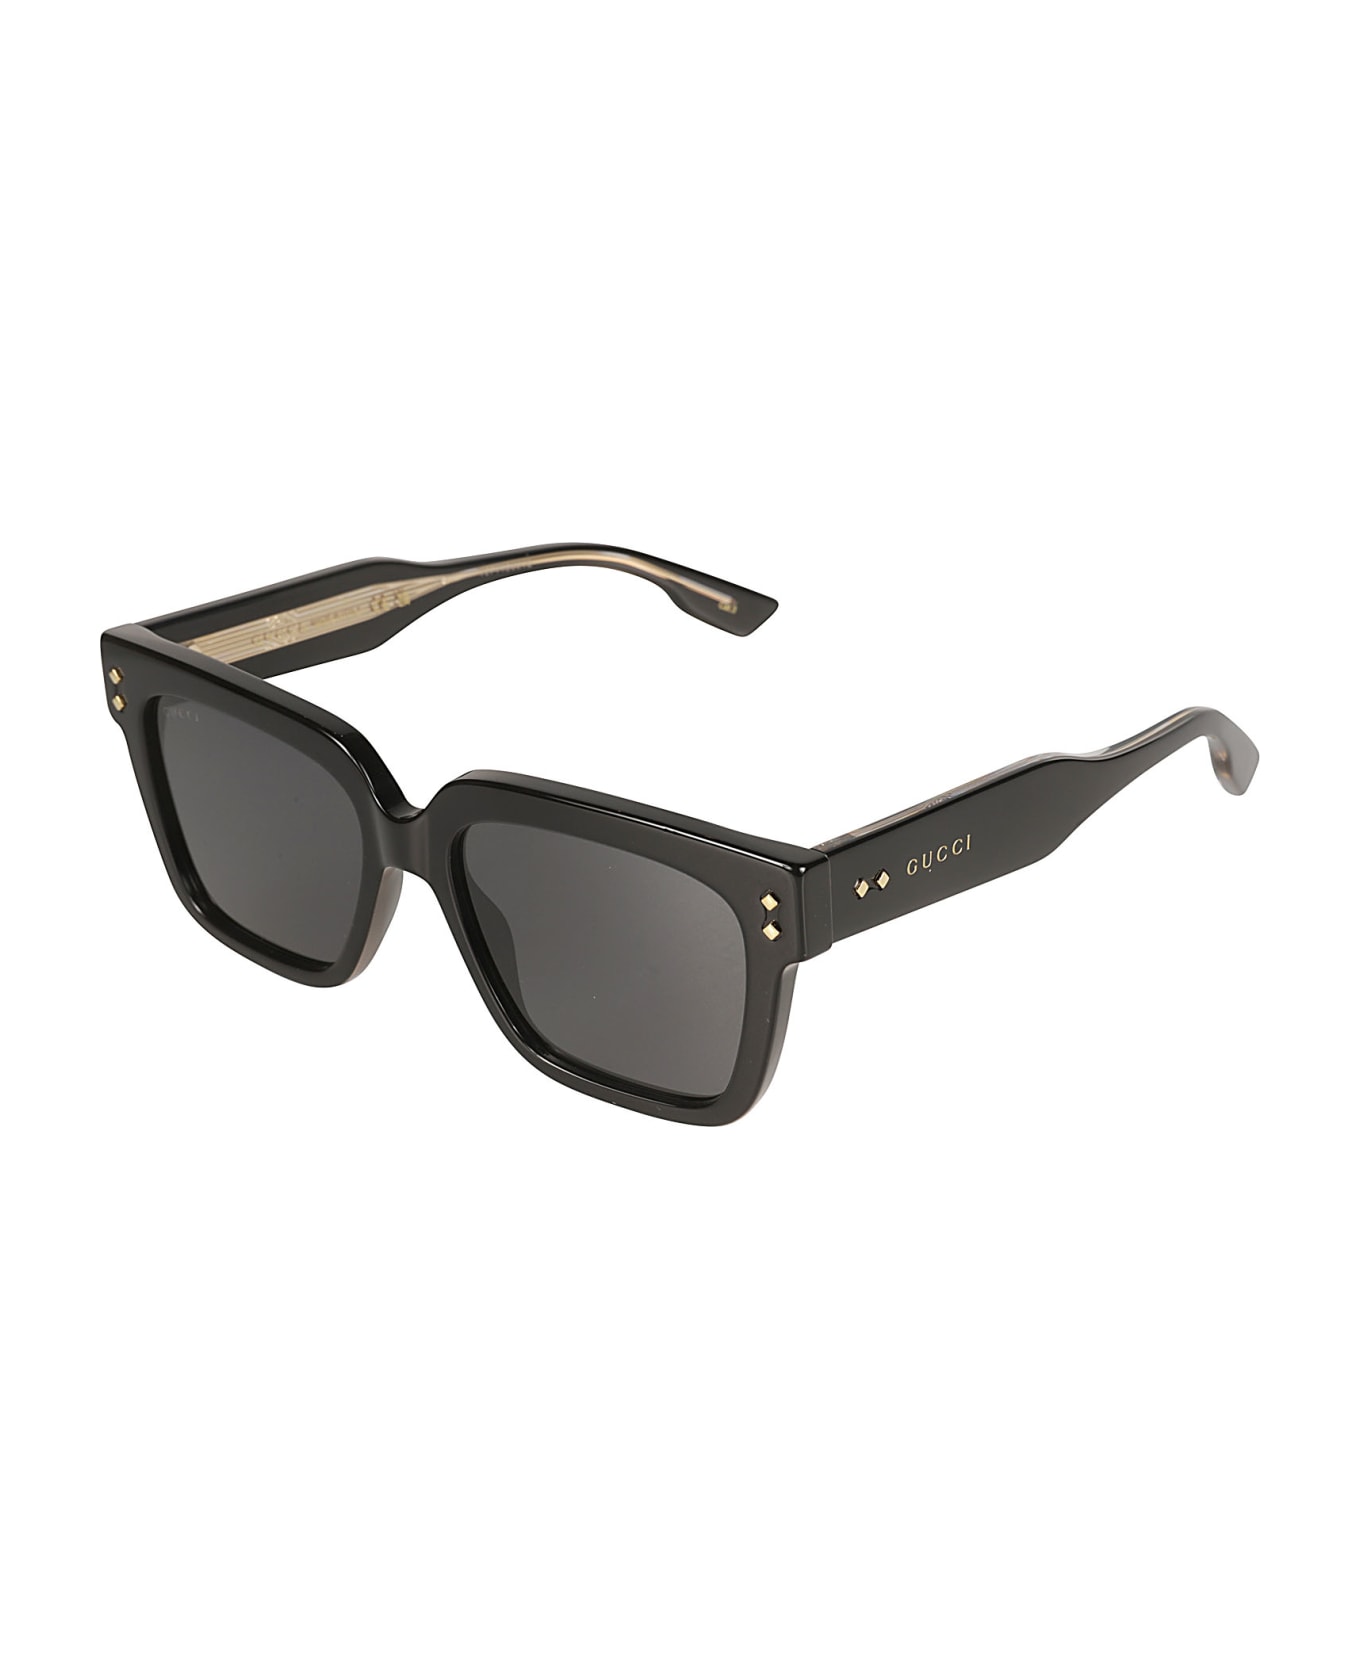 Gucci Eyewear Square Frame Sunglasses - Black/Grey